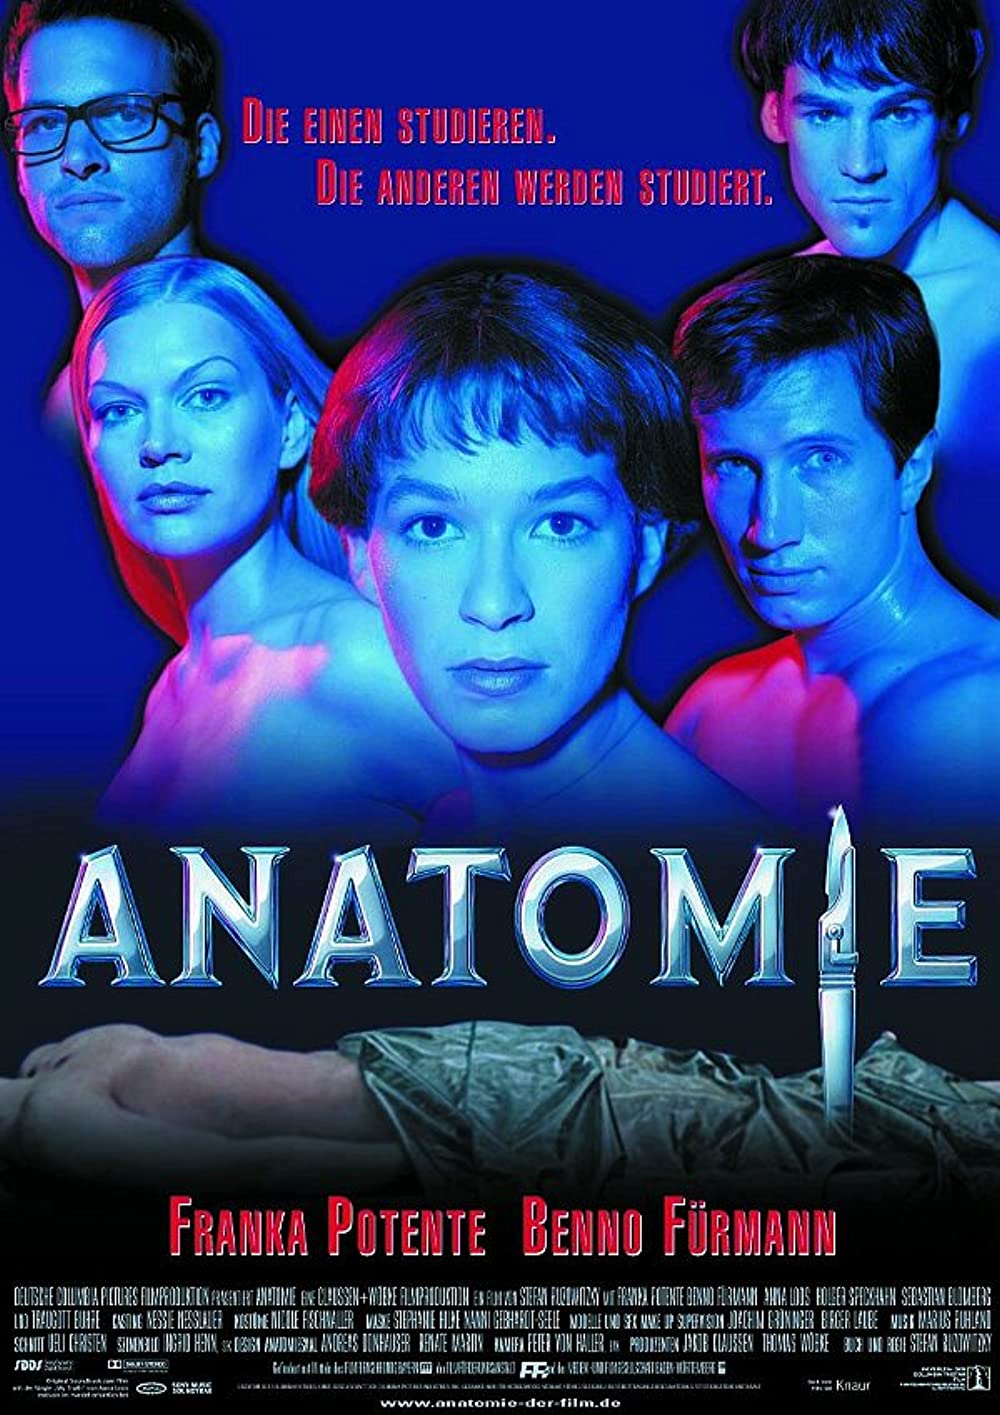 Anatomie (2000) จับคนมาทำศพ